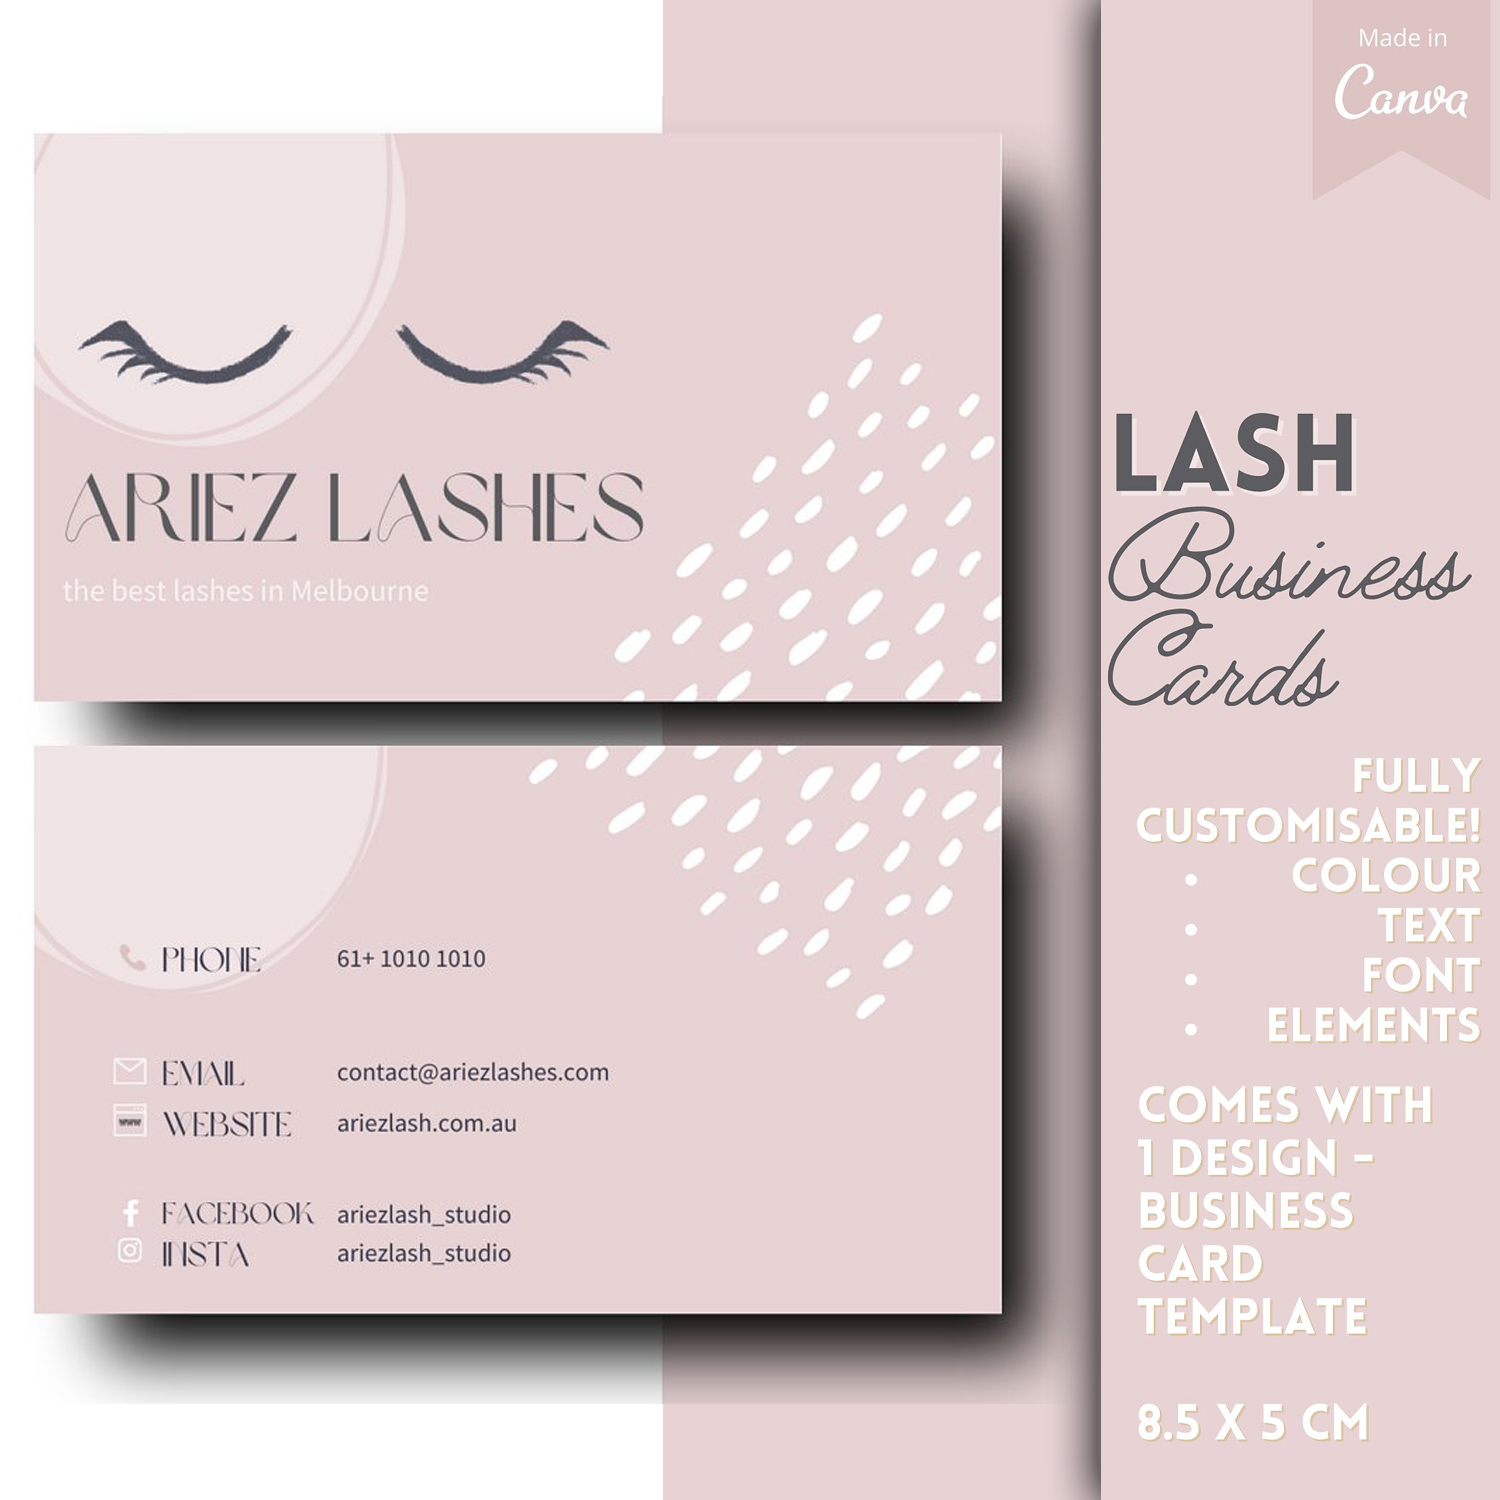 Prints of digital lash business card templates.